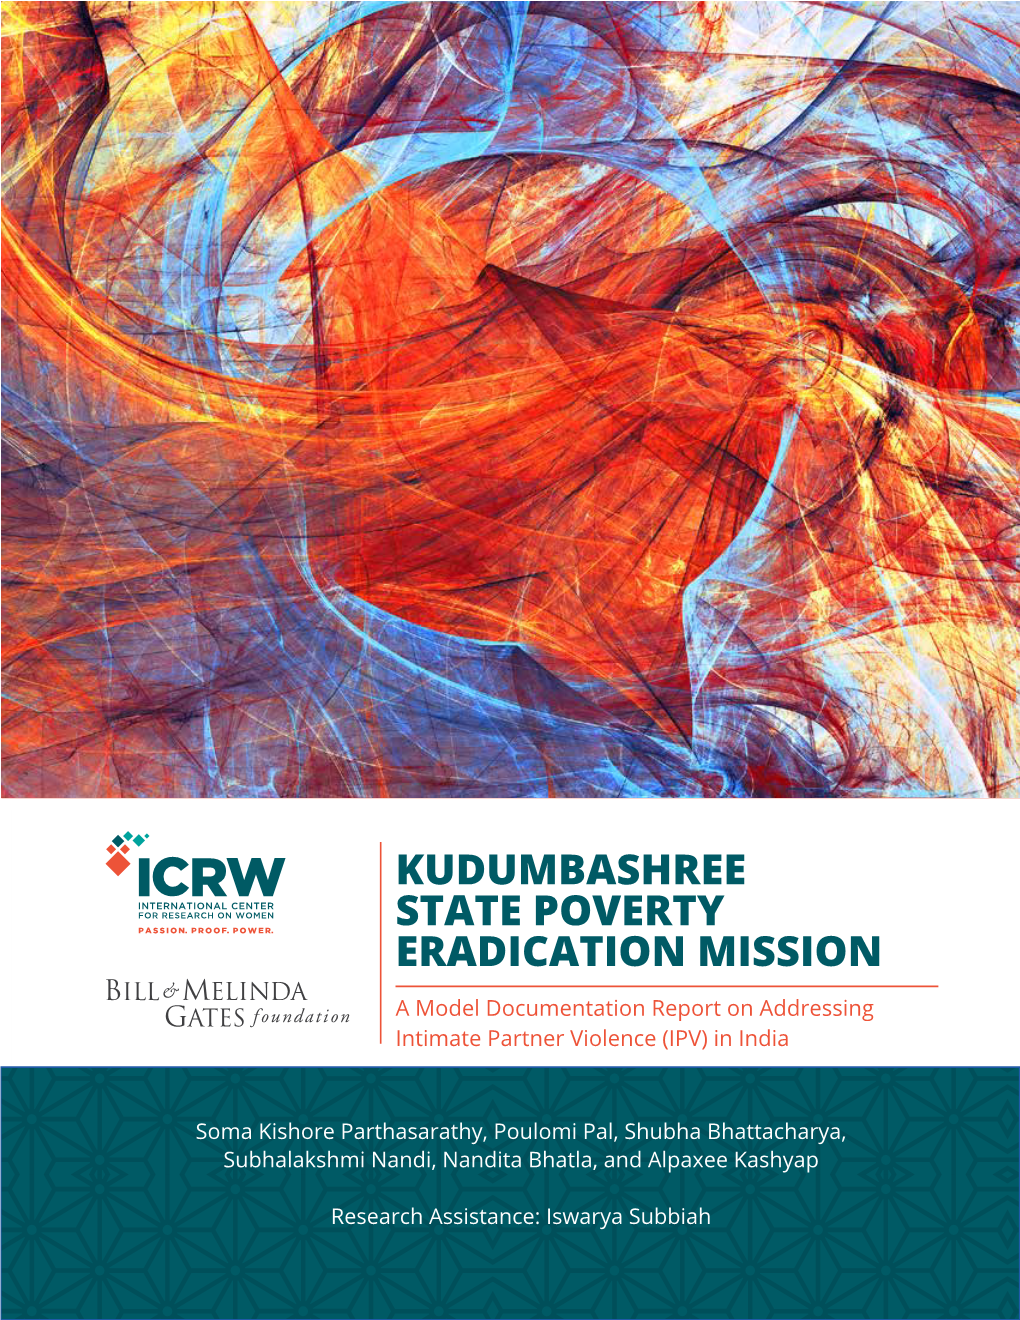 KUDUMBASHREE STATE POVERTY ERADICATION MISSION a Model Documentation Report on Addressing Intimate Partner Violence (IPV) in India